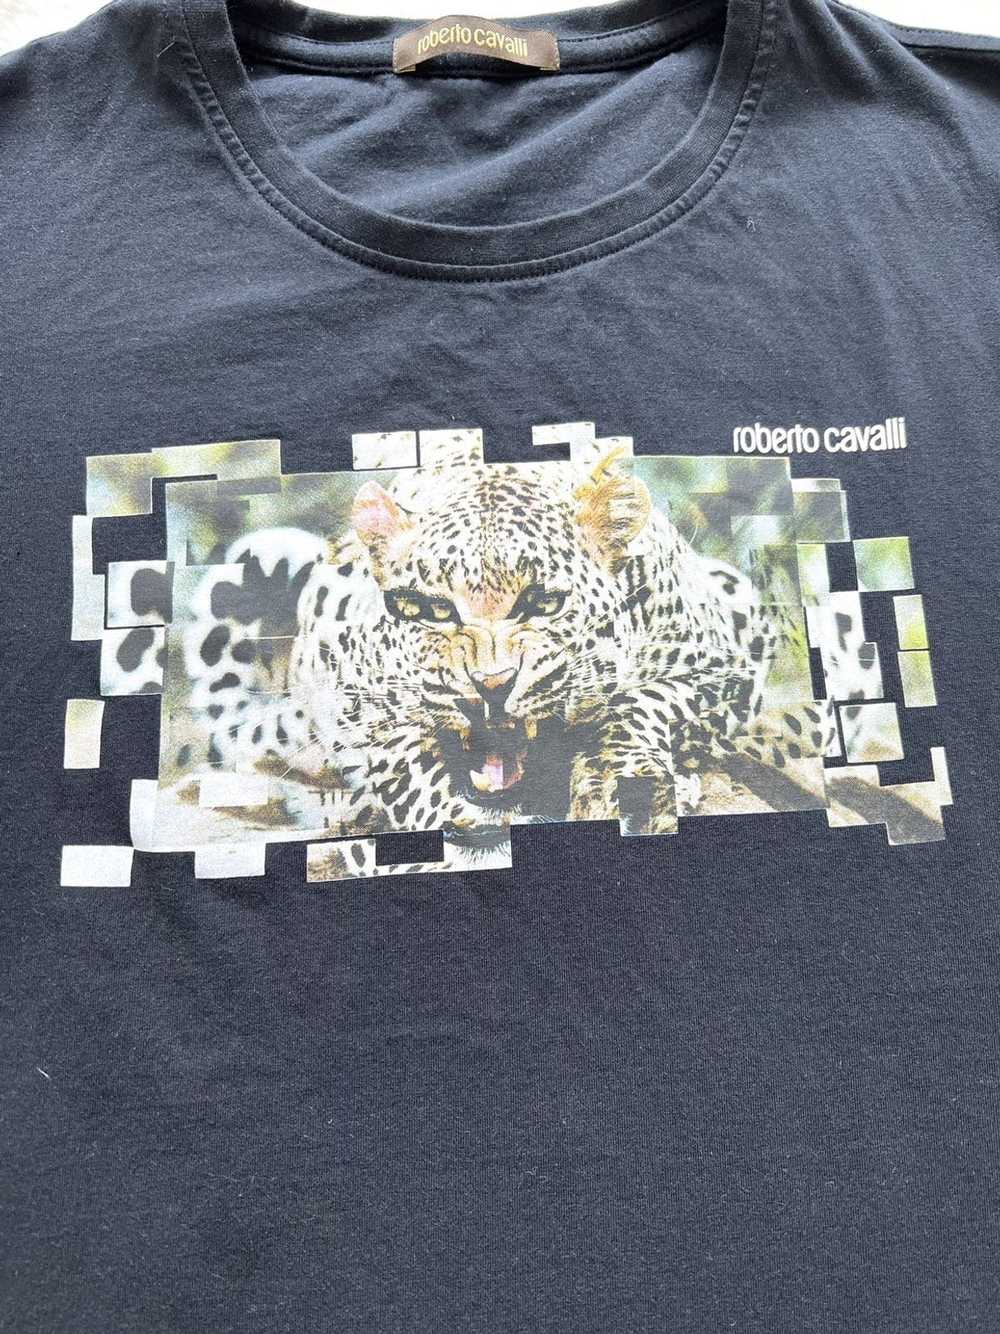 Roberto Cavalli Roberto Cavalli mens t-shirt size… - image 2